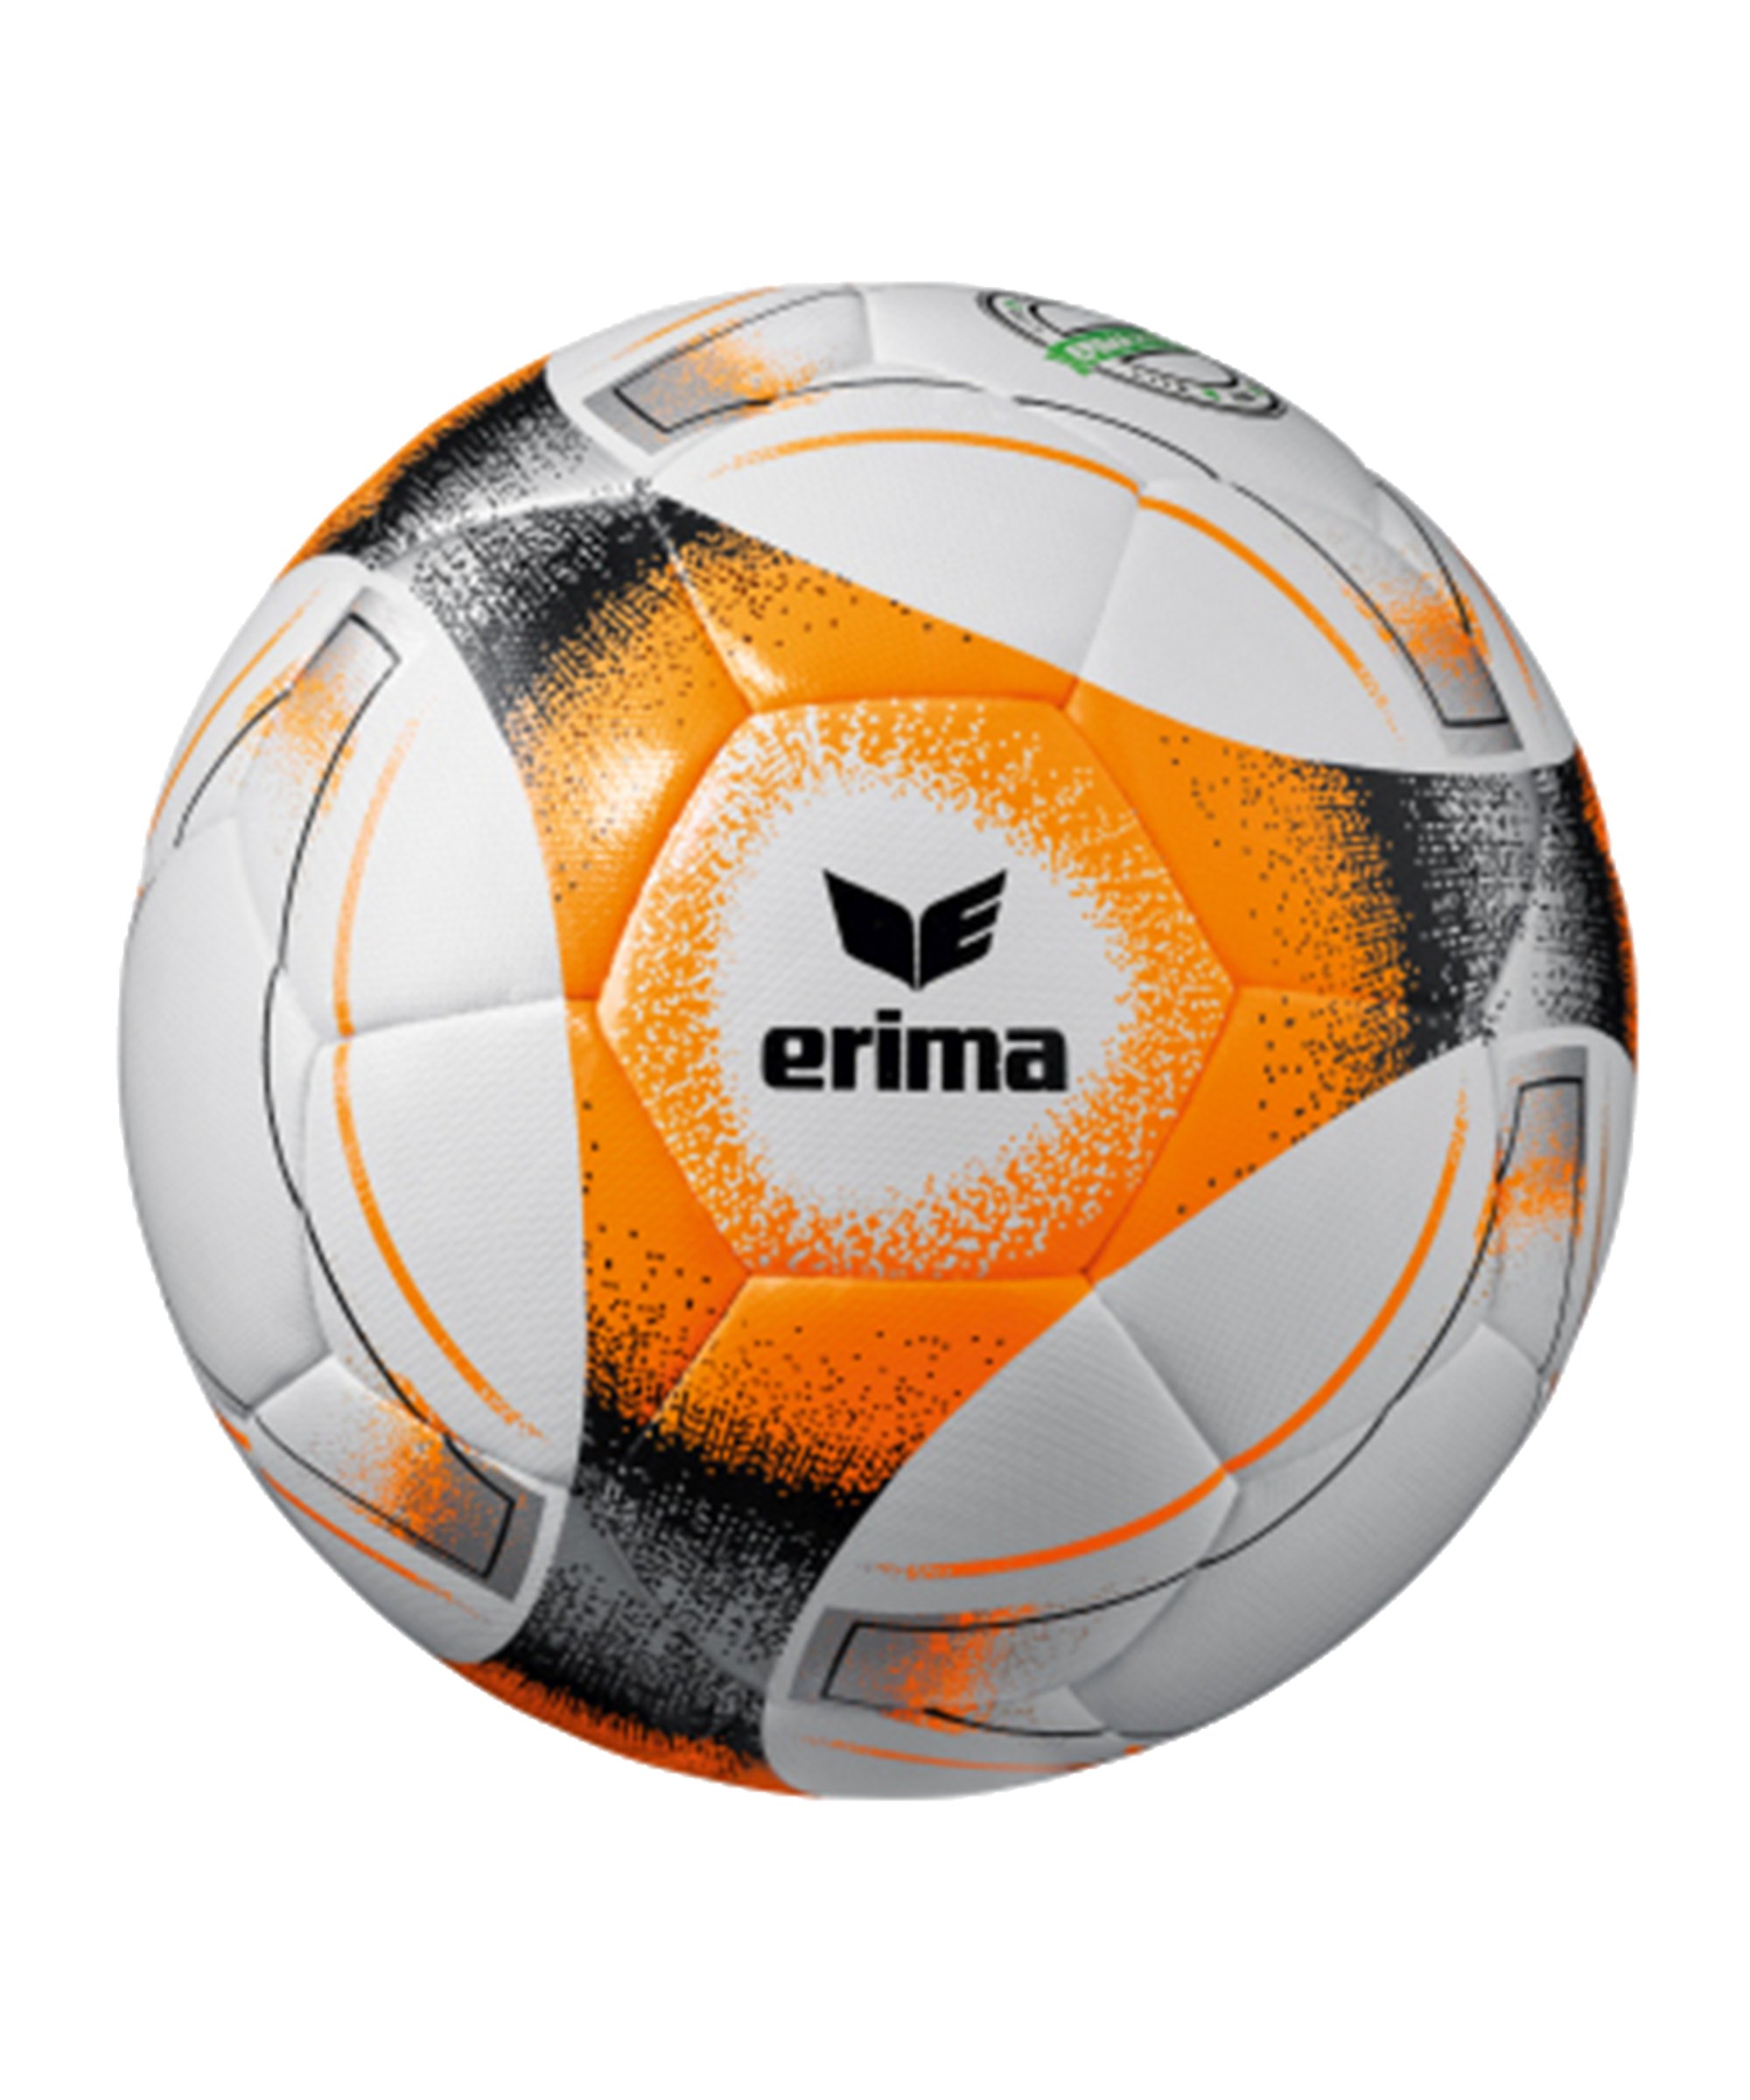 Erima Hybrid Lite 290 Trainingsball Orange - orange